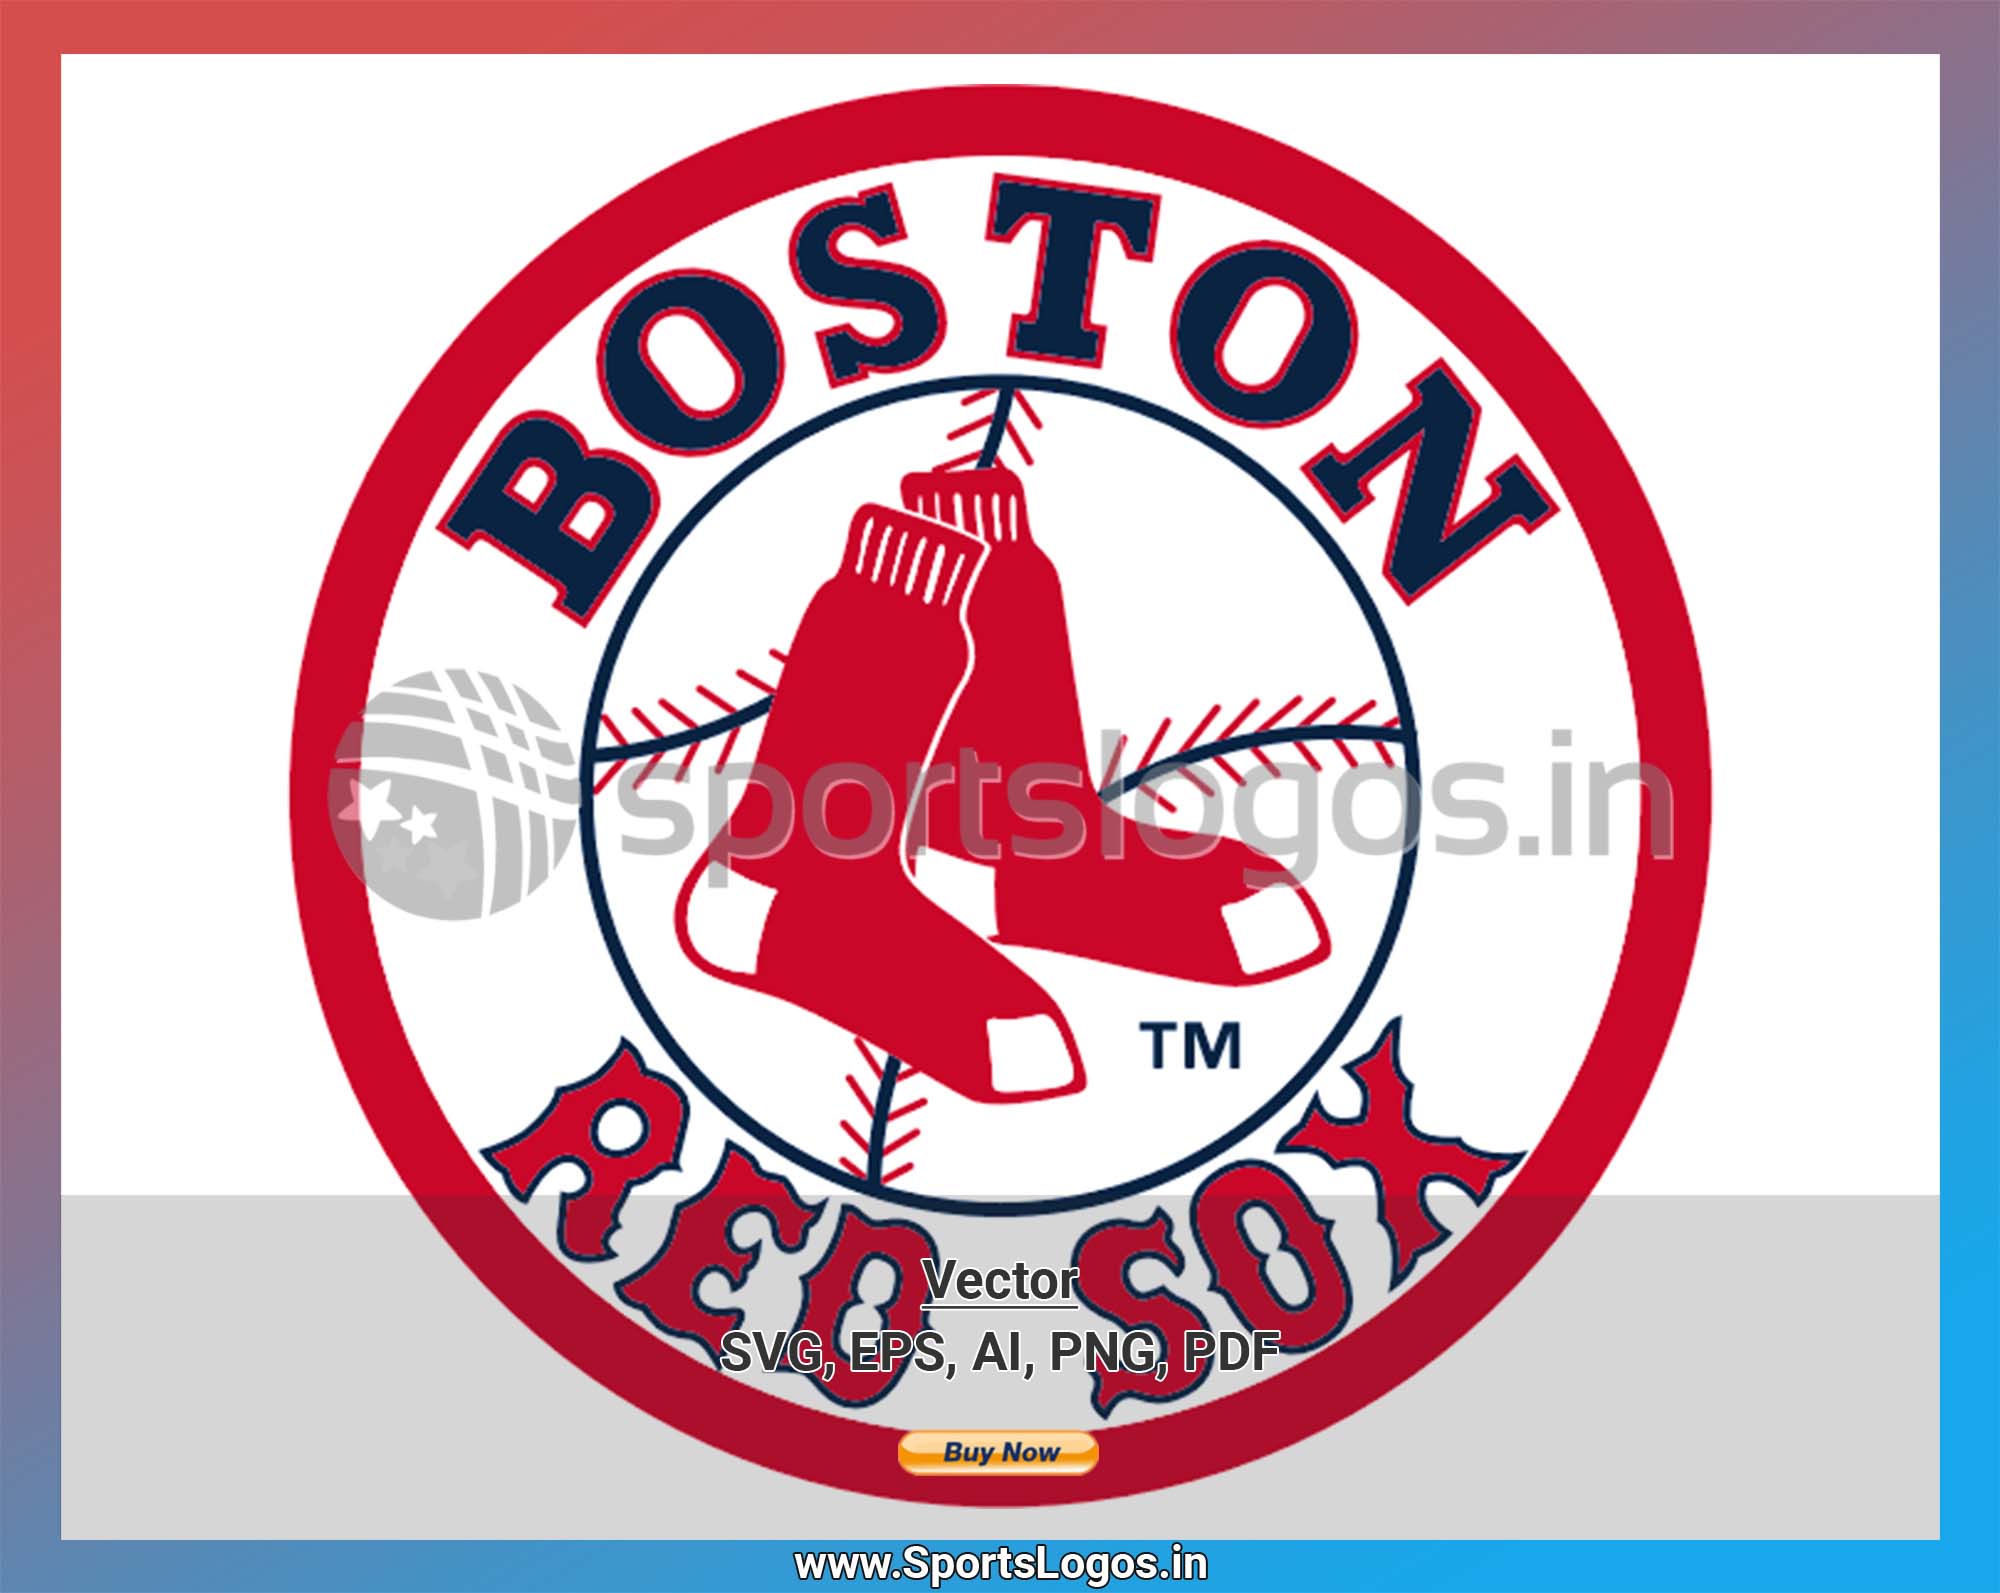 Boston Red Sox (MLB) Logo Color Scheme » Brand and Logo